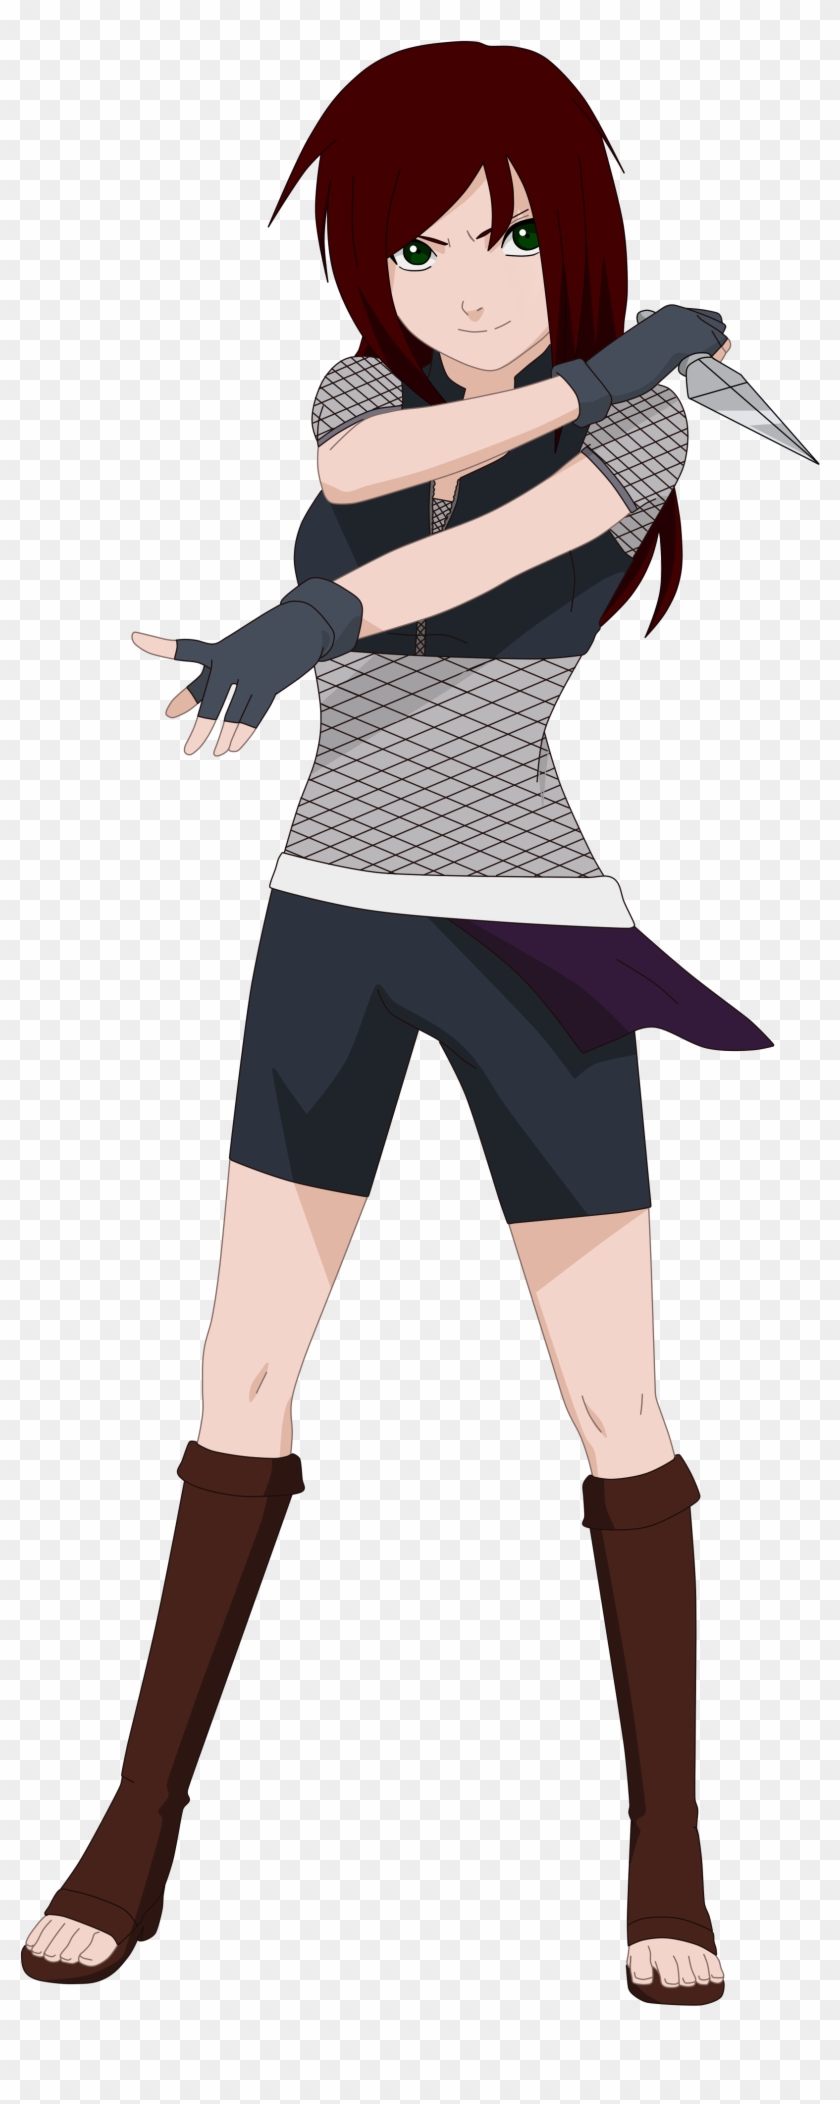 Kid Gaara Full Body - Sakura Naruto Transparent Background Clipart #20817